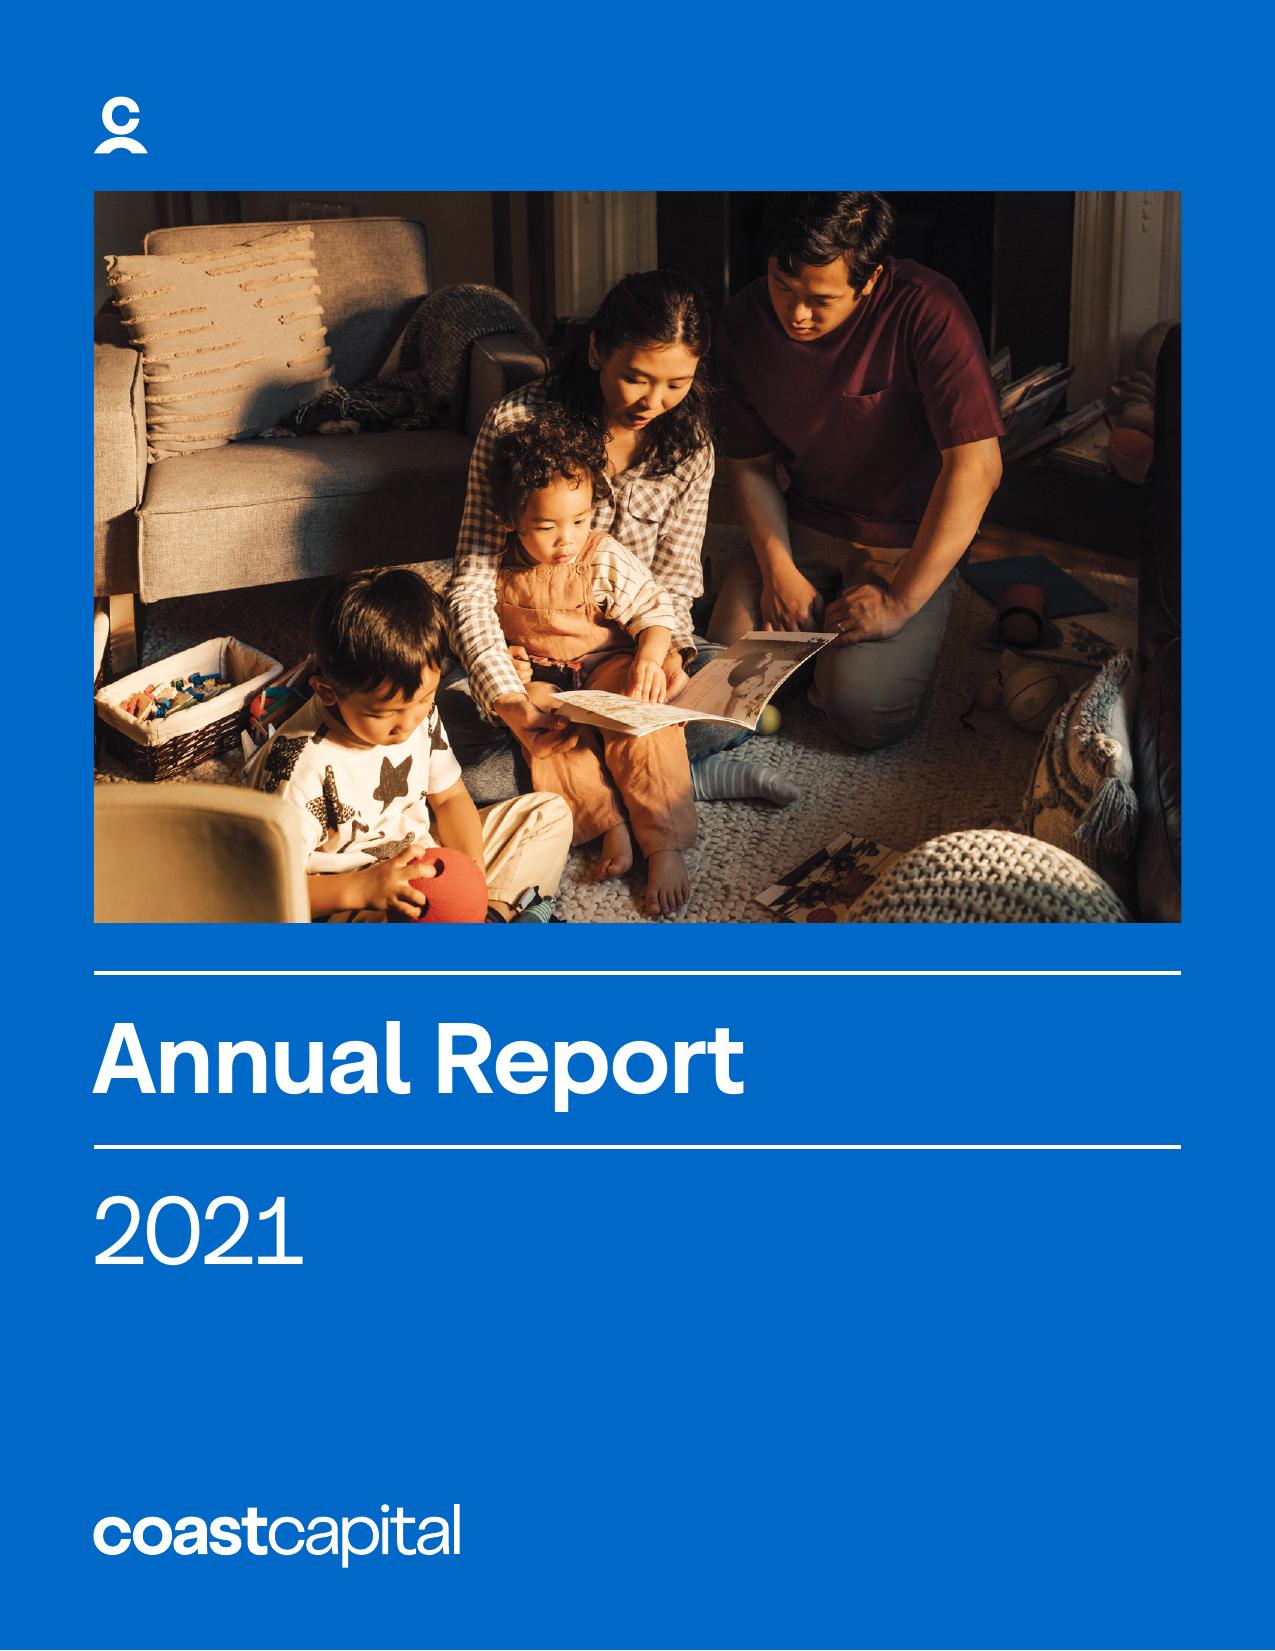 HERITAGE 2021 Annual Report